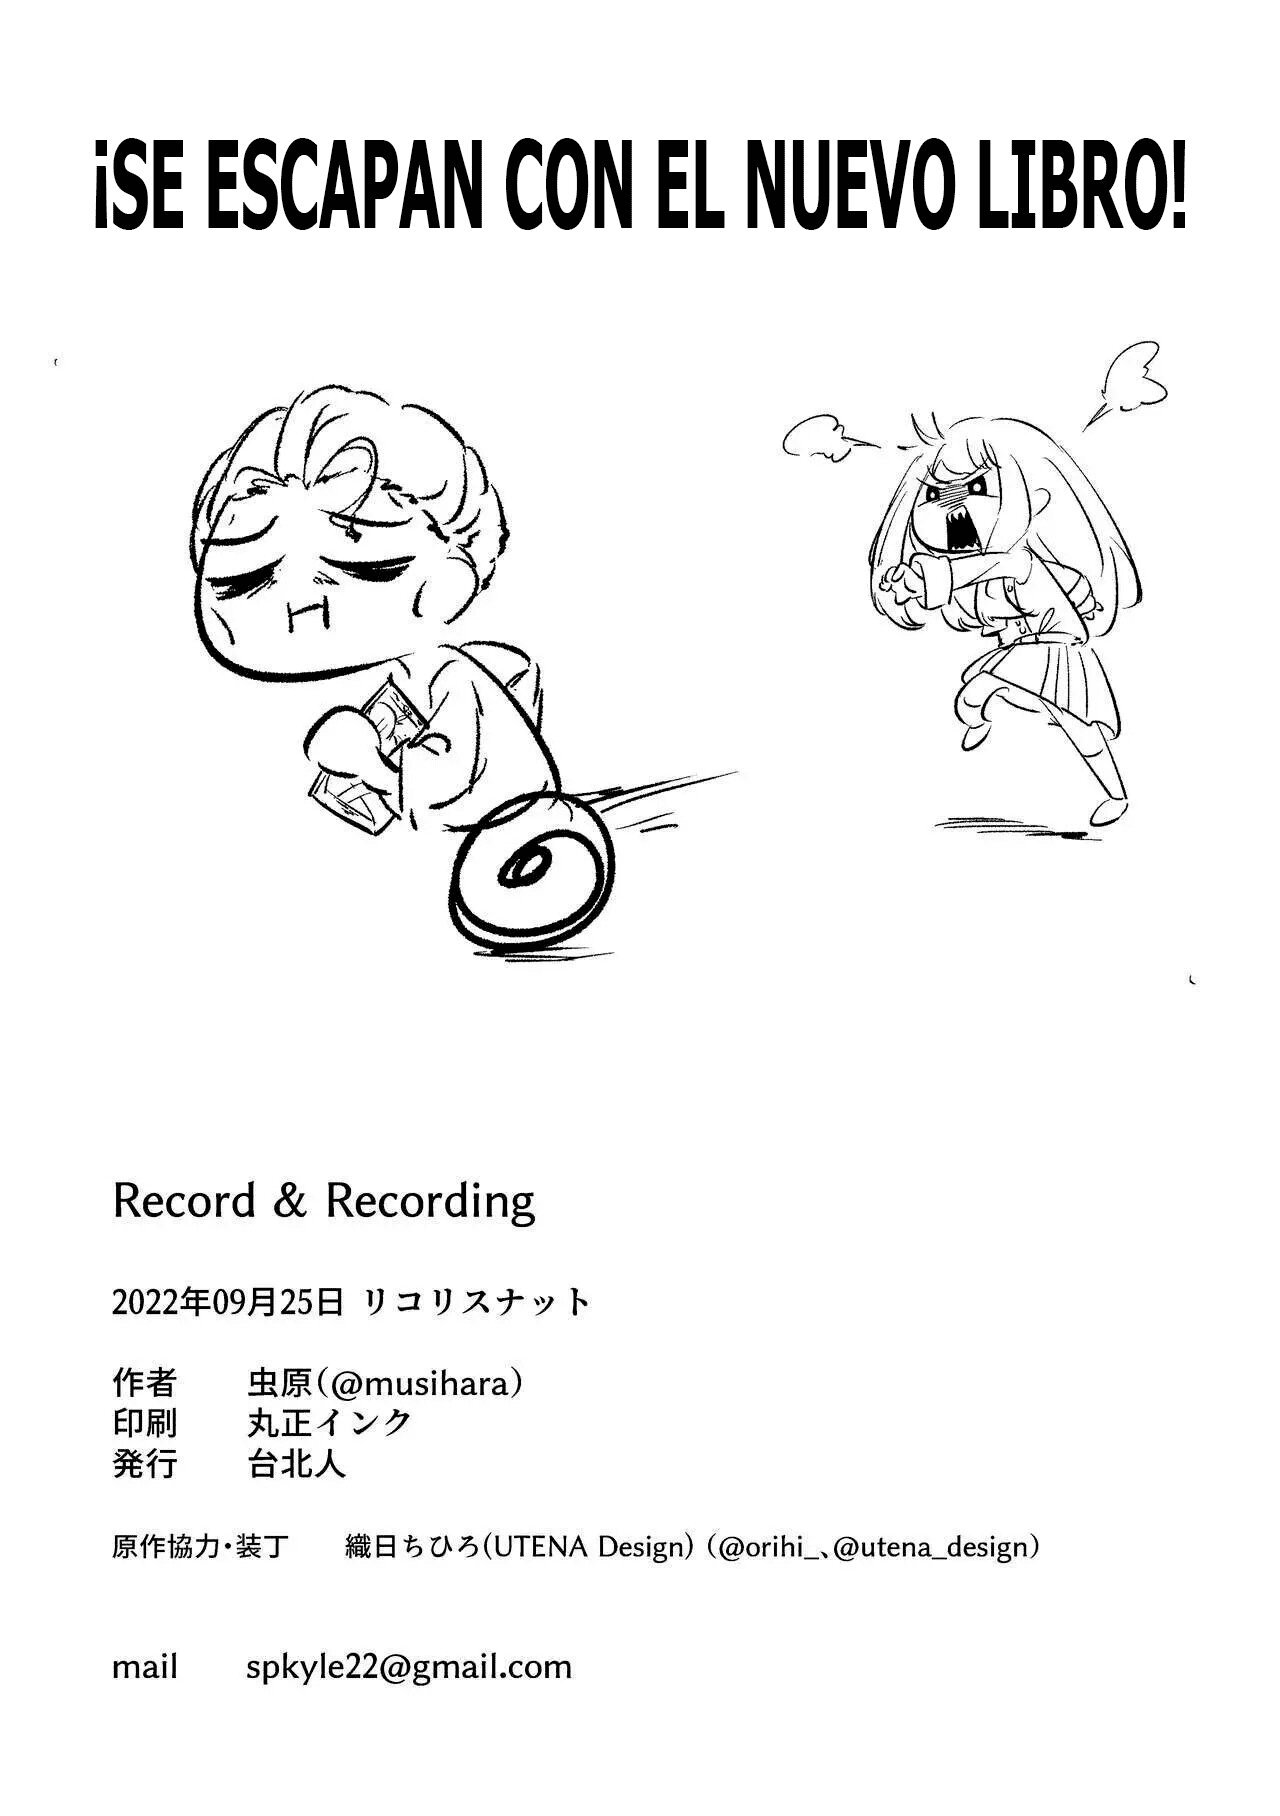 Record & Recording - 20